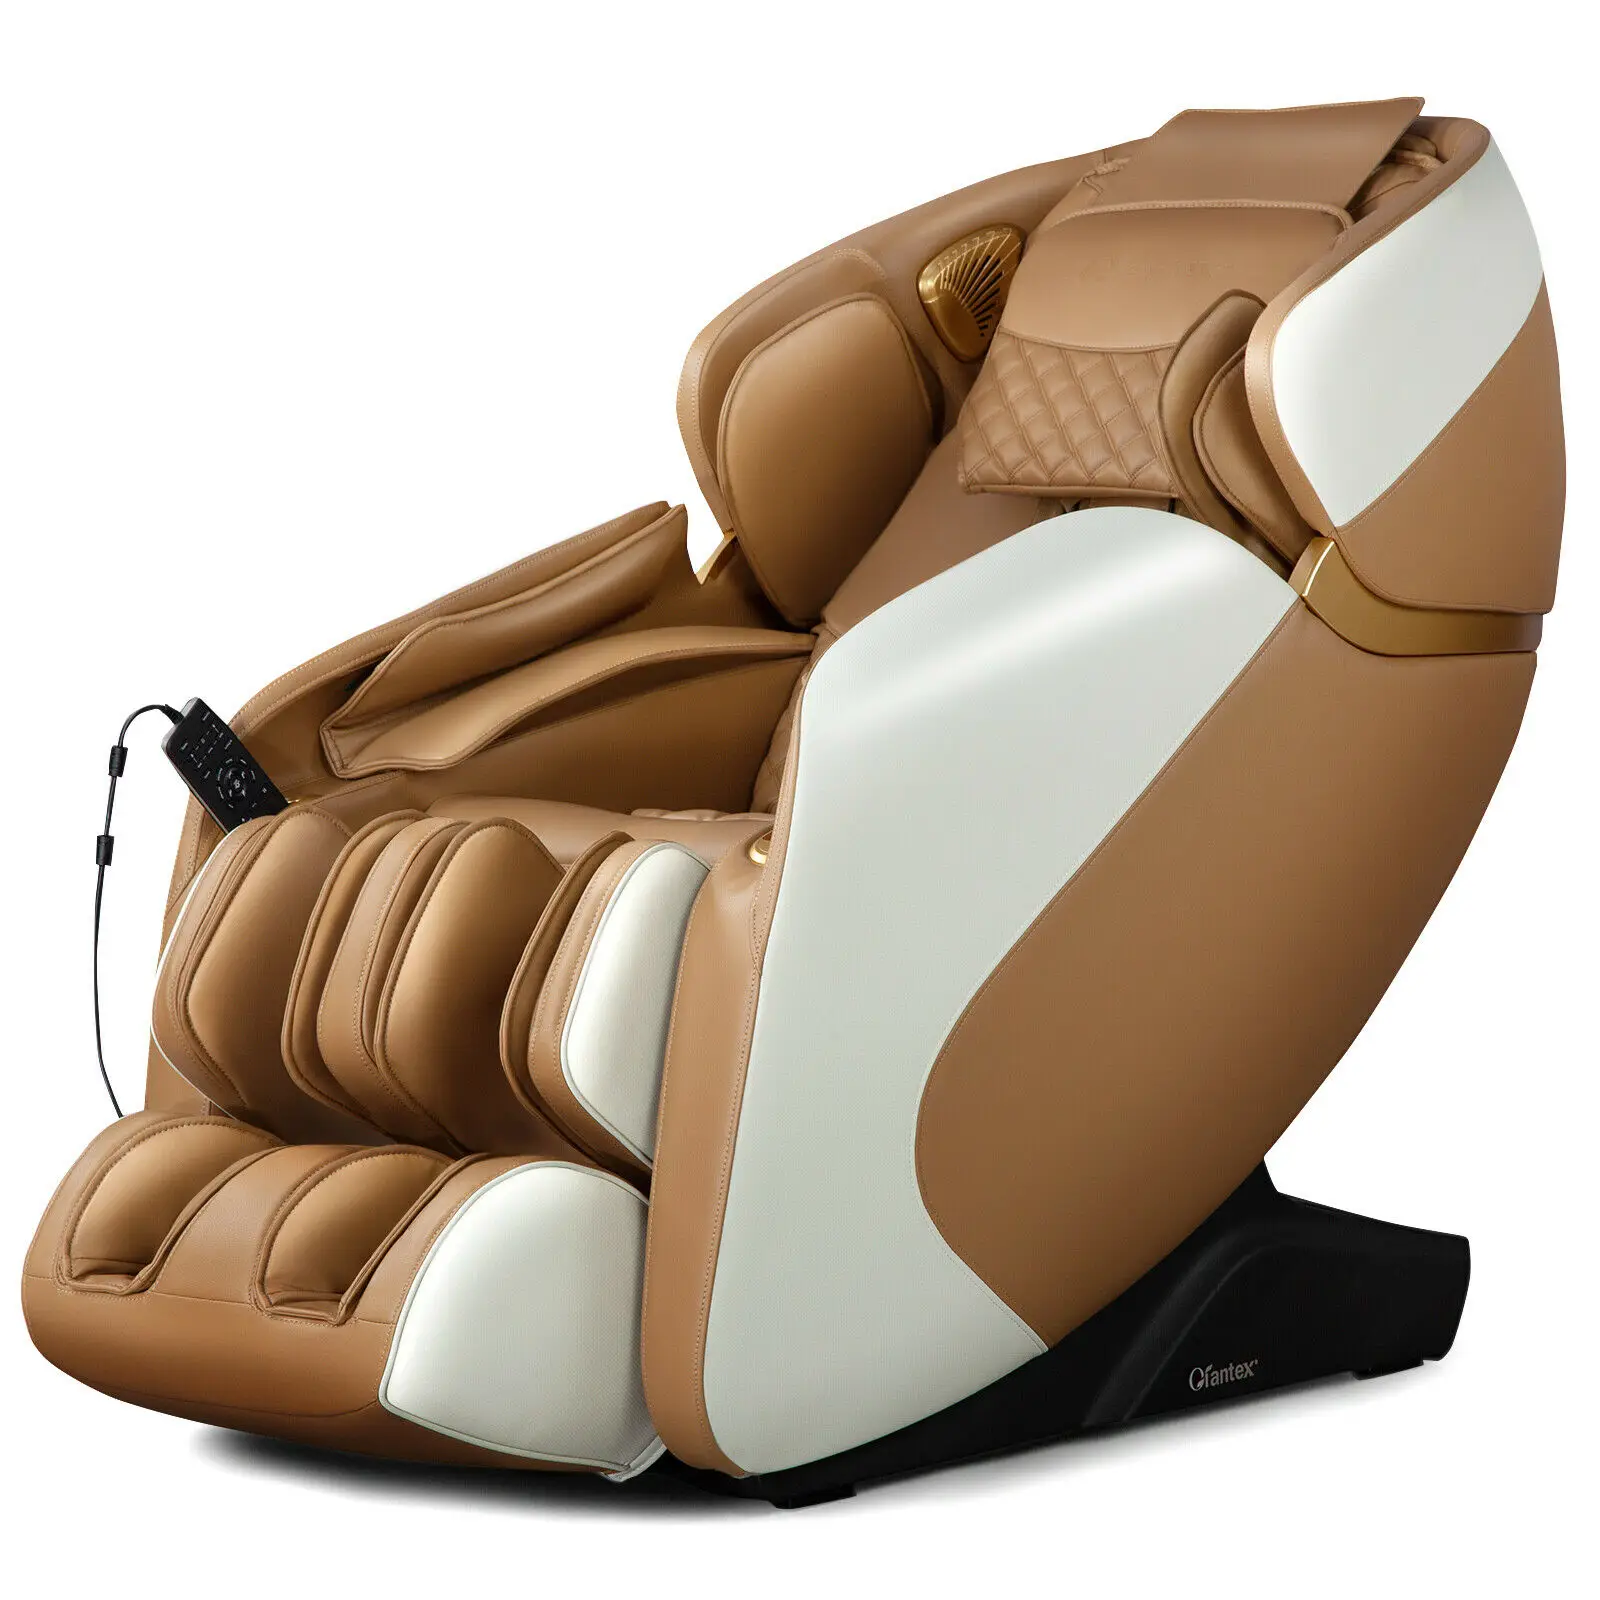 https://ae01.alicdn.com/kf/Se4e7d448358941d9bd31df9d3319f5b5P/Giantex-Full-Body-Zero-Gravity-Massage-Chair-Recliner-w-SL-Track-Heat-Bluetooth.jpg